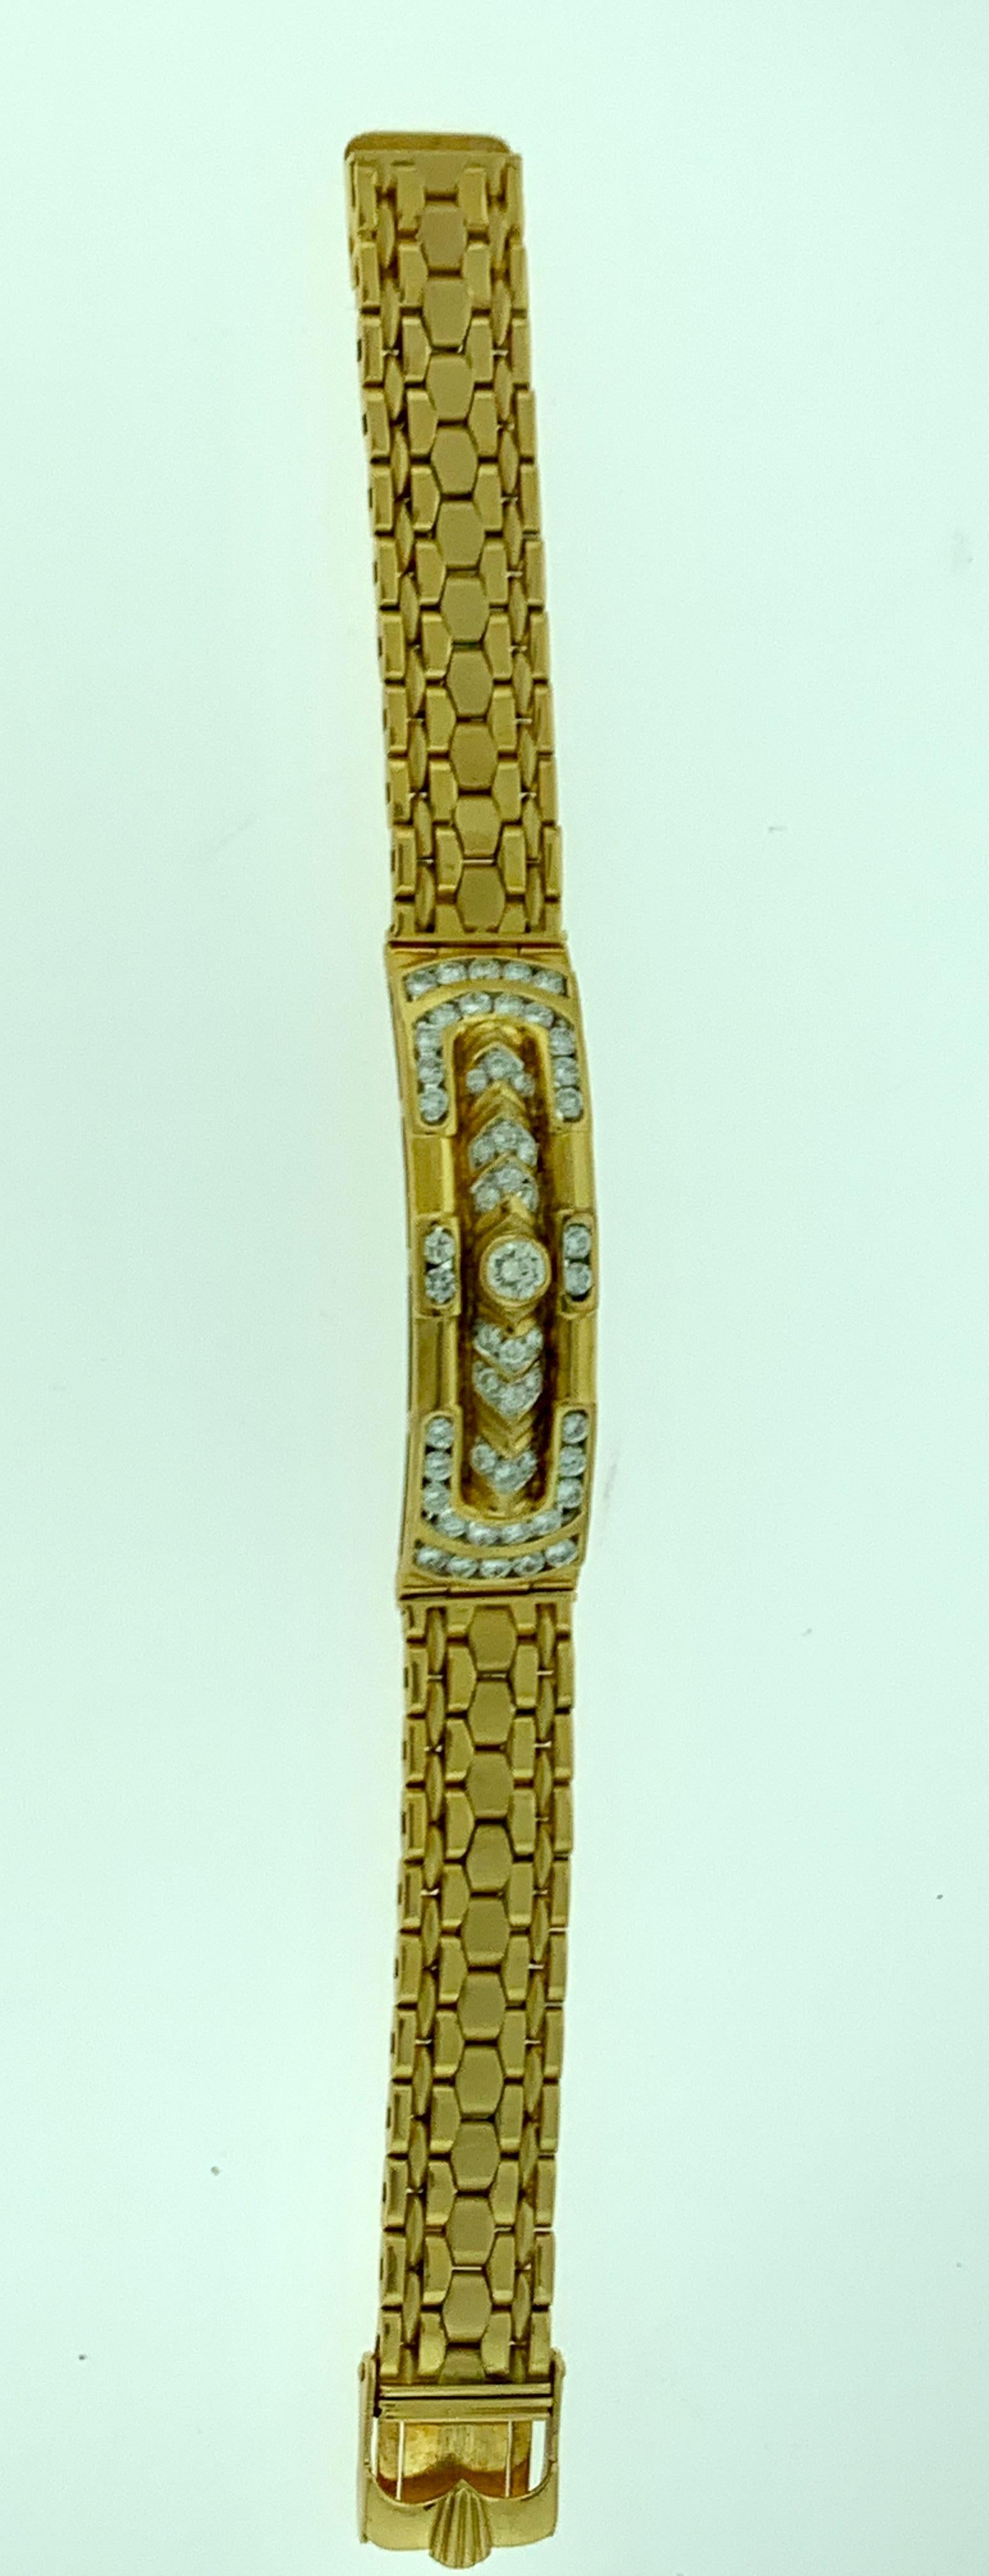 4.5 Carat Diamond Bracelet in 18 Karat Yellow Gold, 62 Grams, Estate, Unisex 8